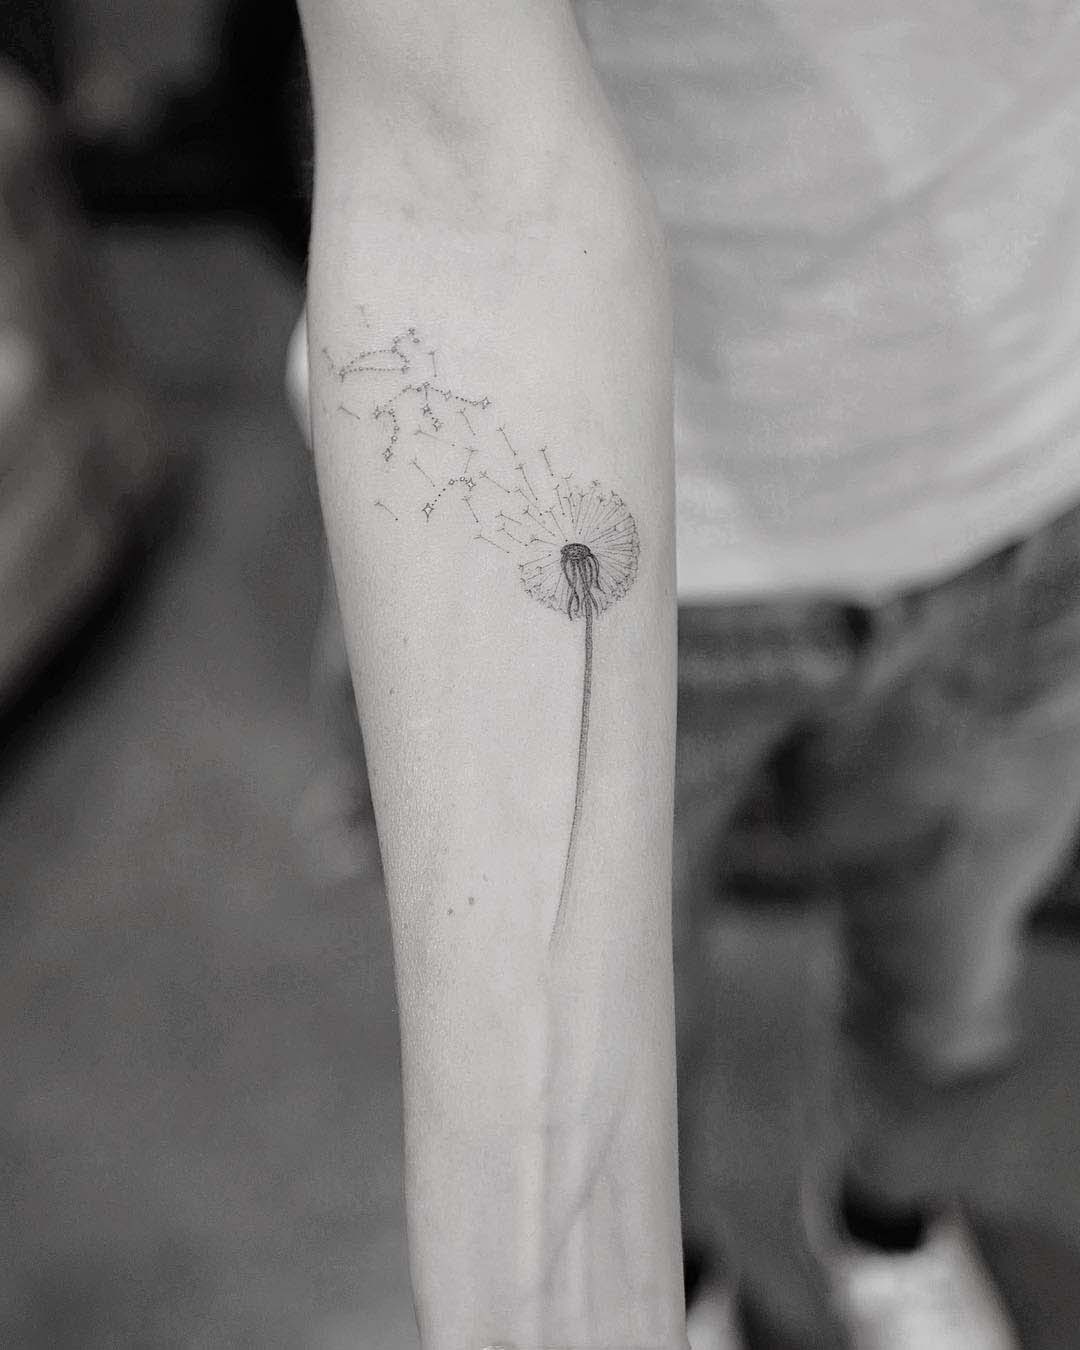 dandelion tattoo on arm